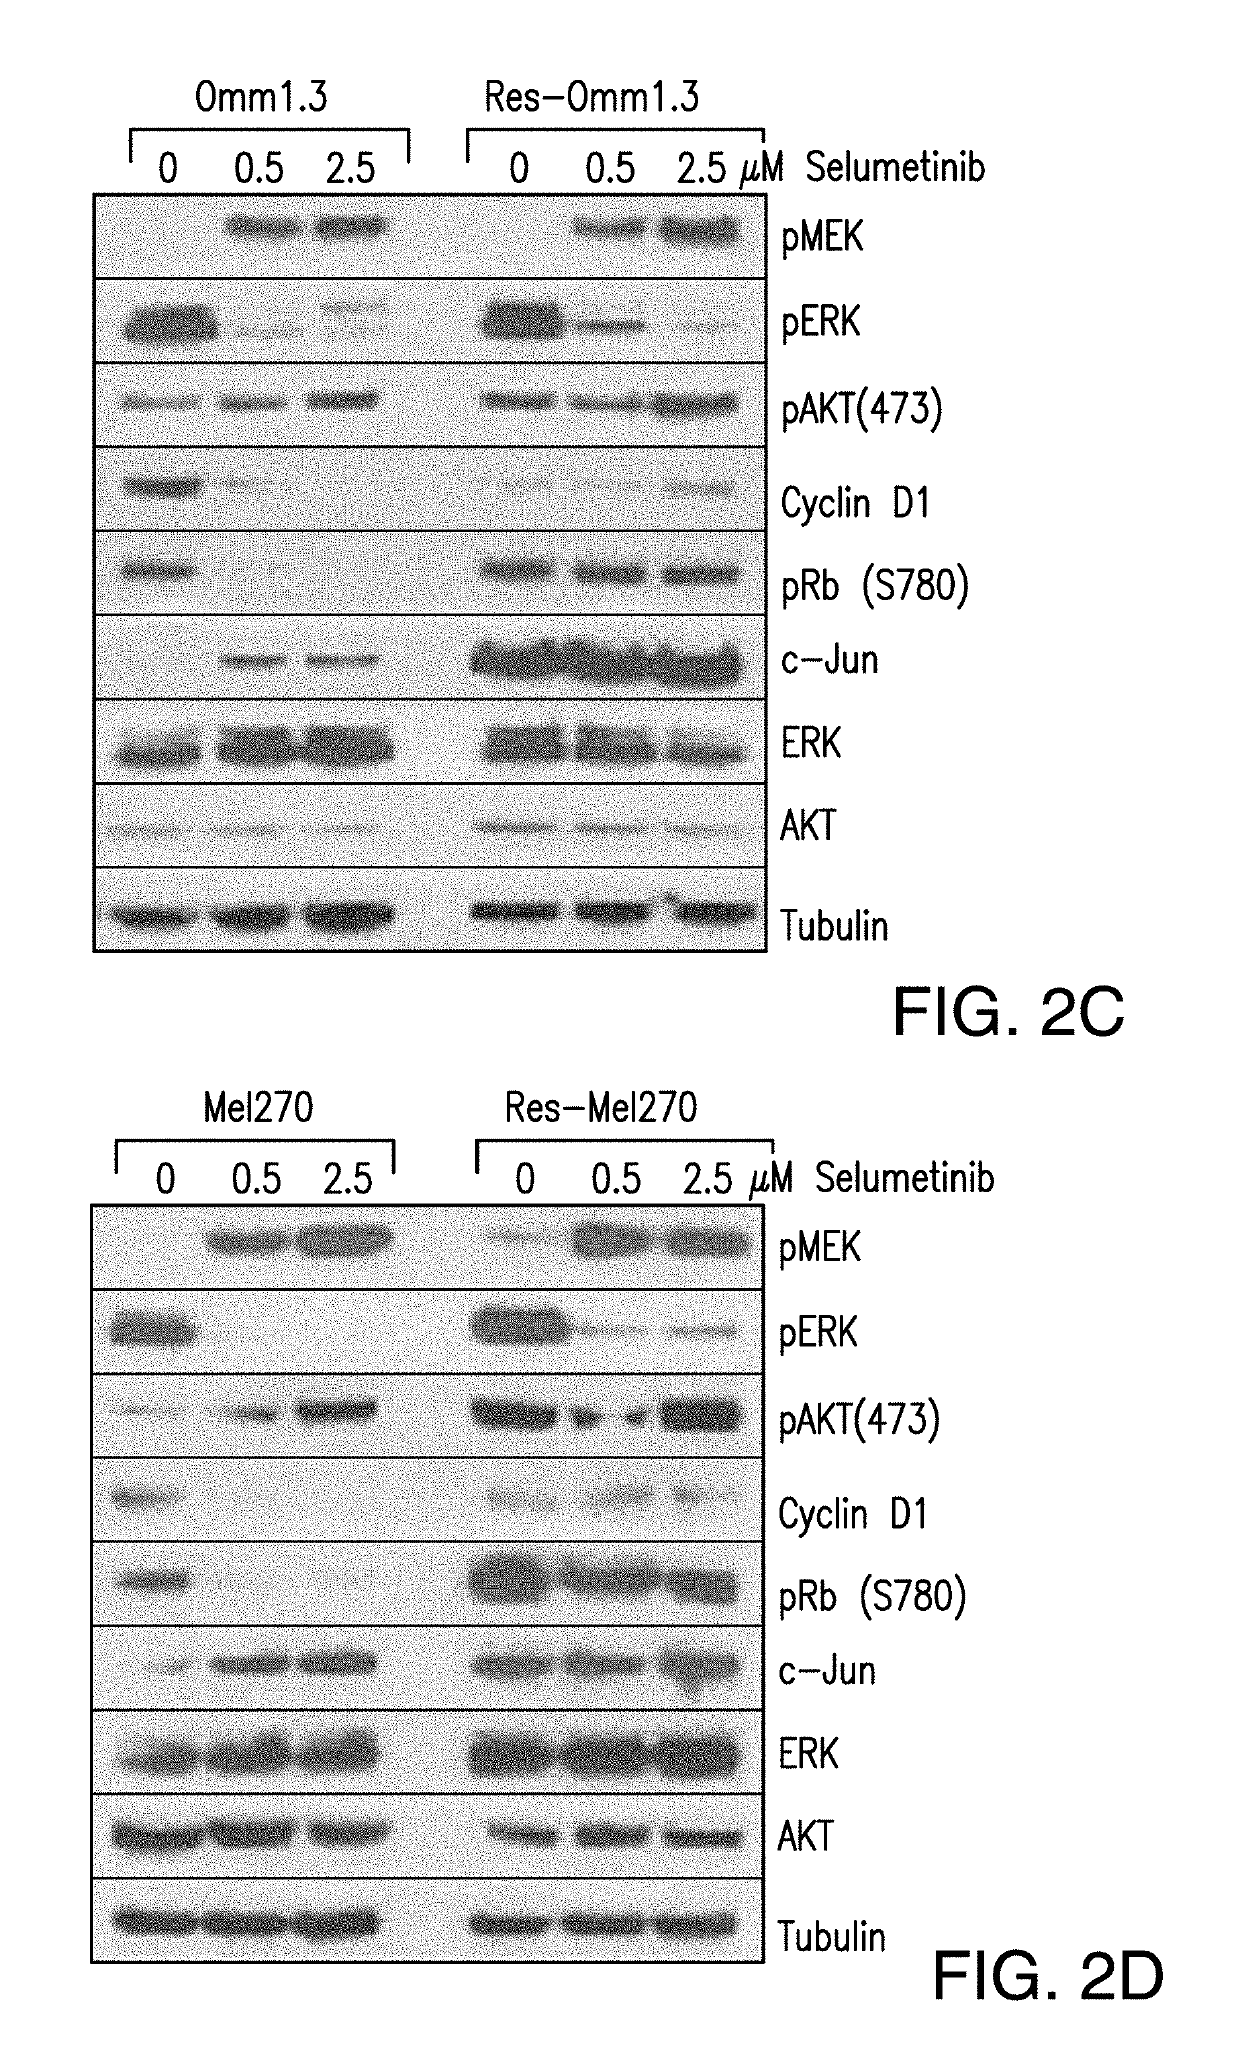 DDX43 as a biomarker of resistance to MEK1/2 inhibitors